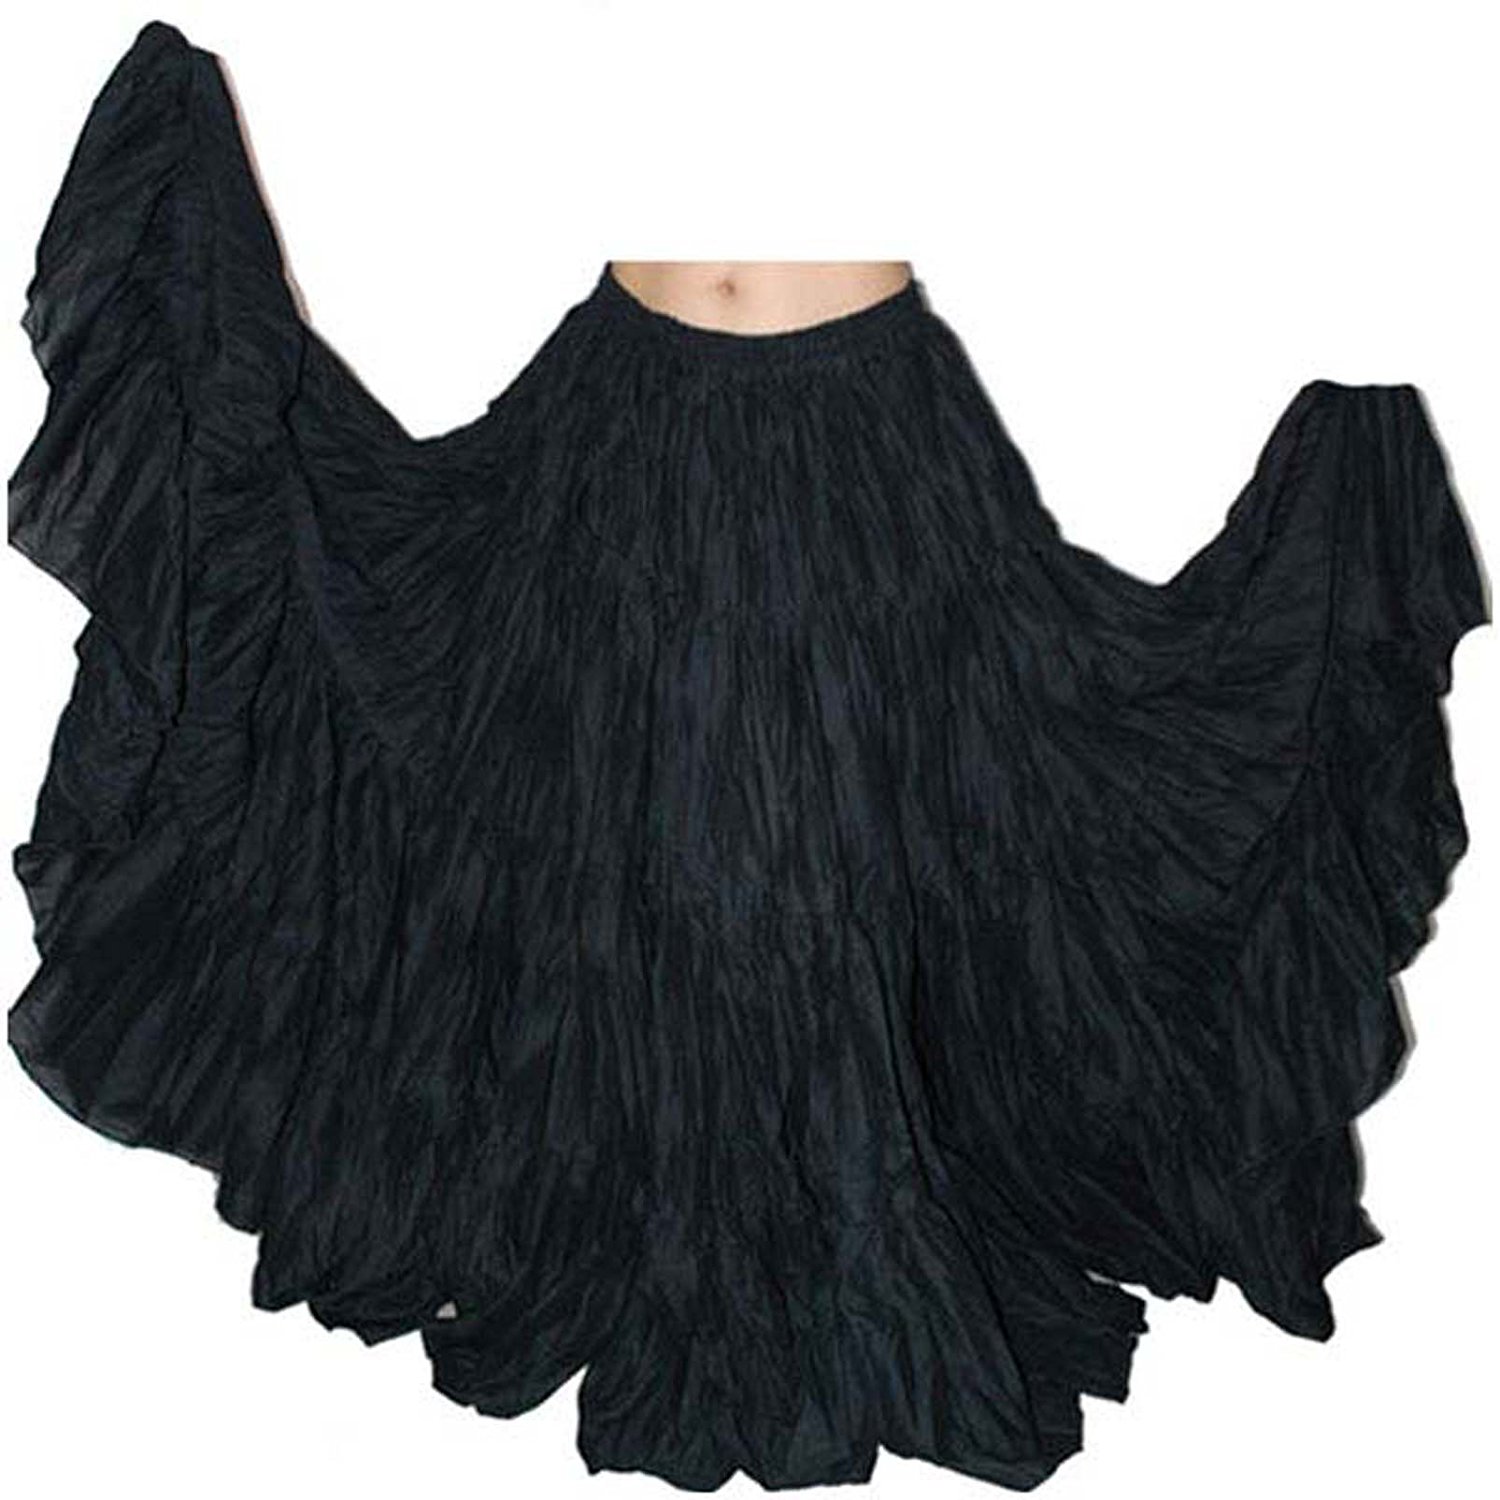 gypsy skirt wevez® womenu0027s gypsy 25 yard solid color cotton skirt (black) at amazon  womenu0027s MXSUIMZ